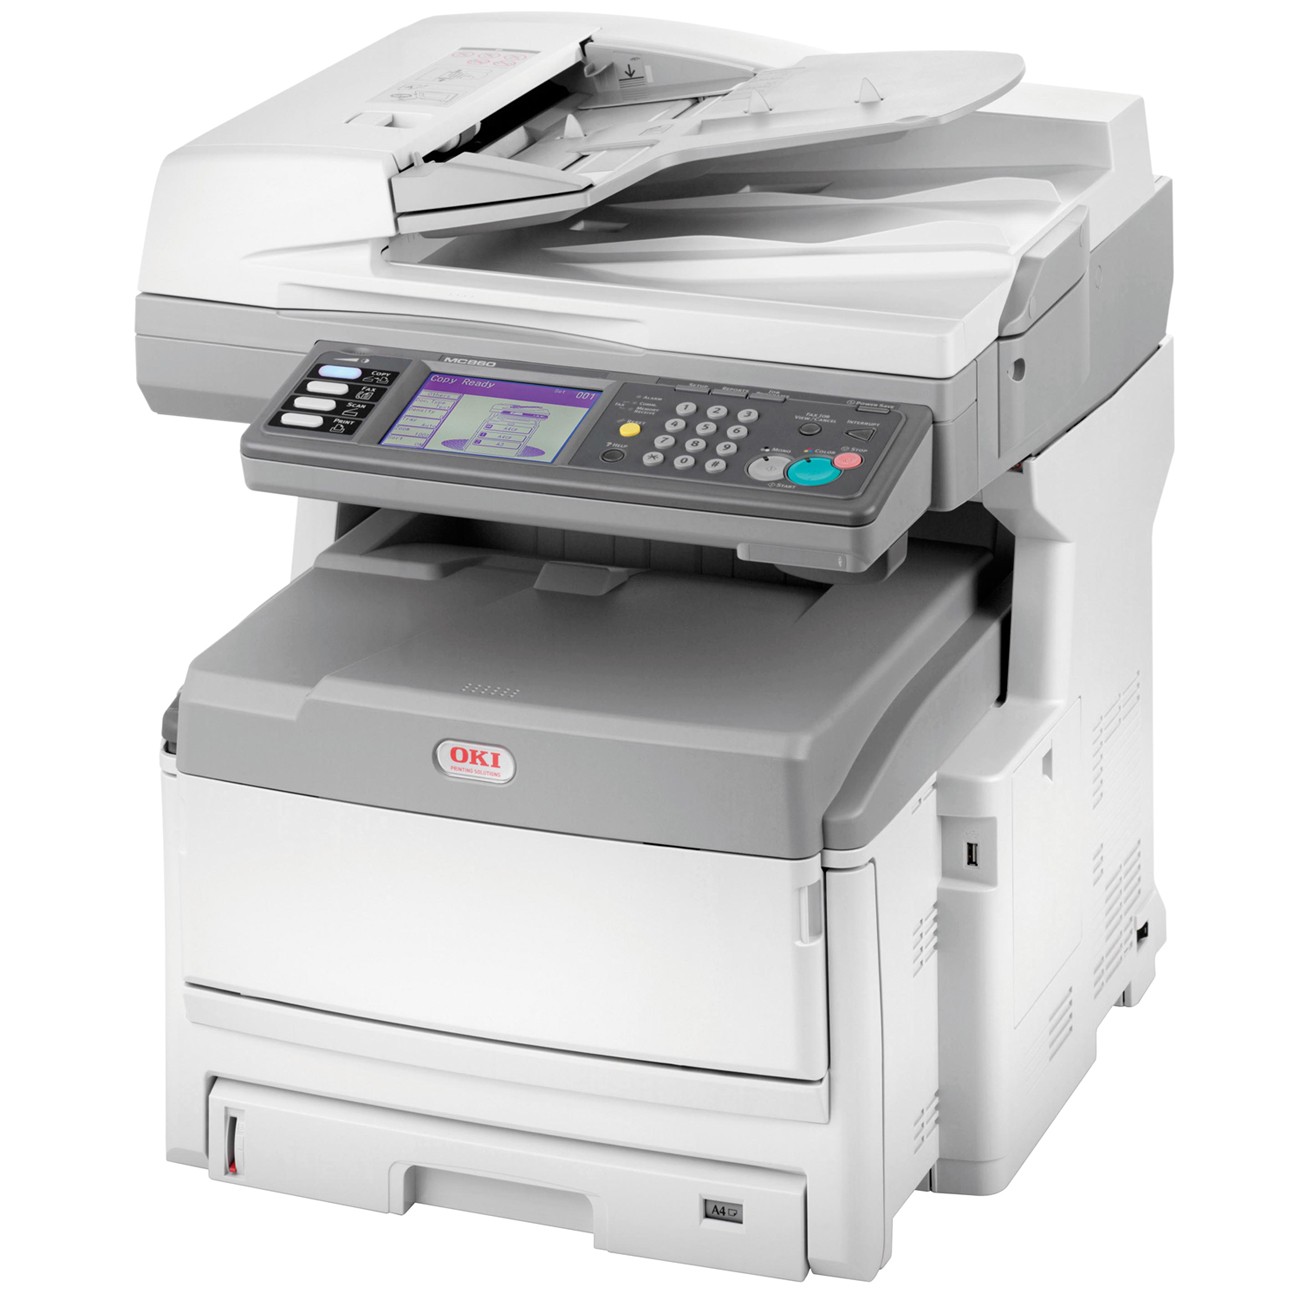 Moske jury klart Best Buy: Oki LED Multifunction Printer Color Plain Paper Print Desktop  MC860